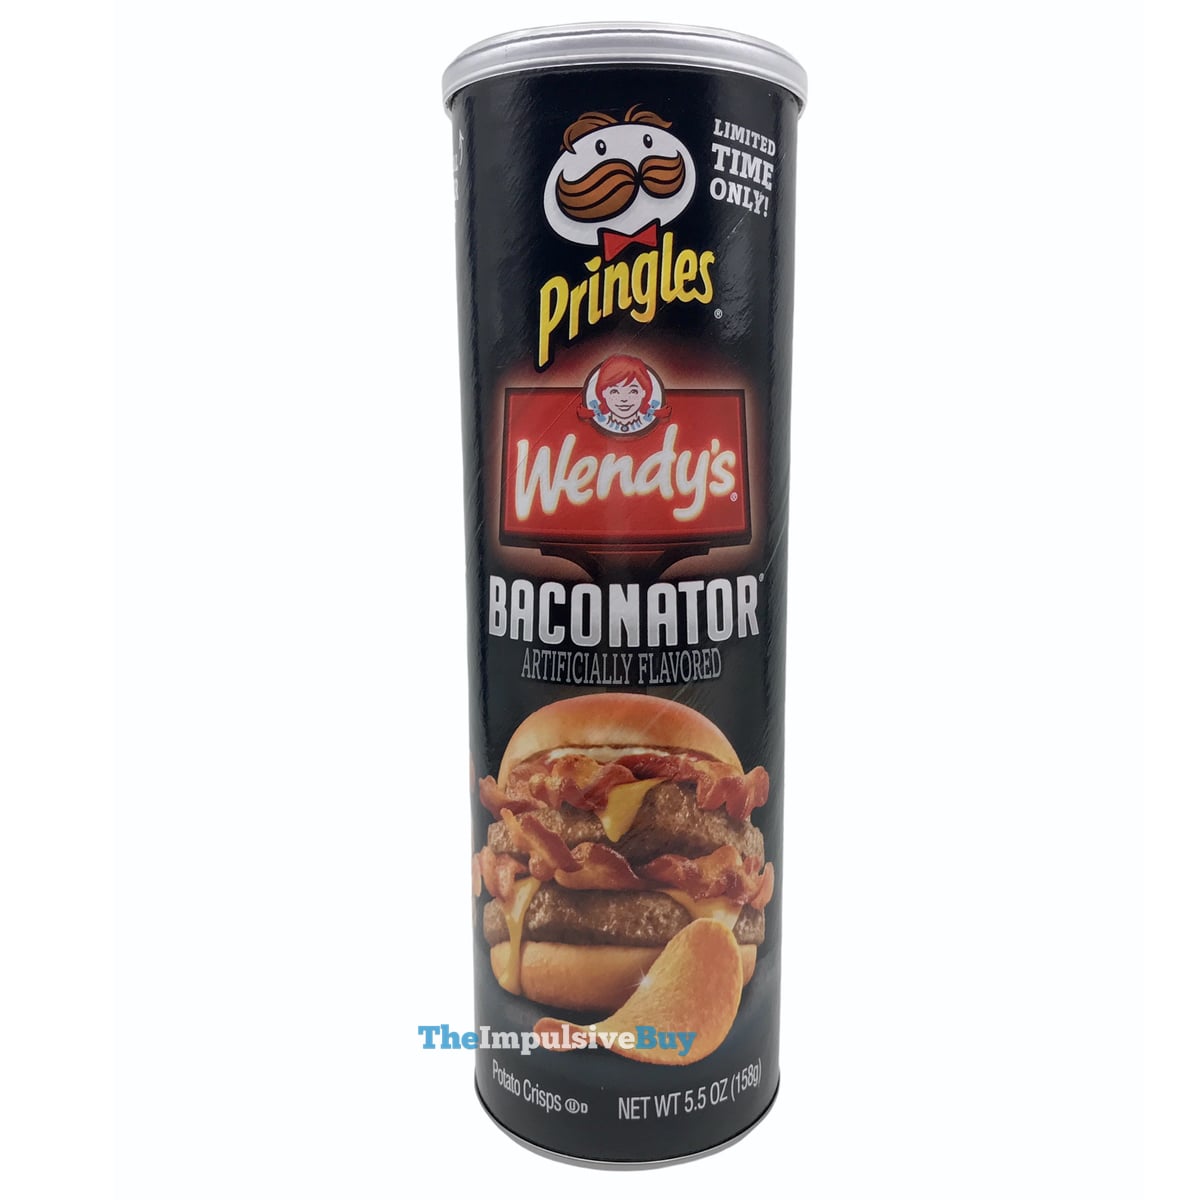 REVIEW: Wendy's Baconator Pringles - The Impulsive Buy